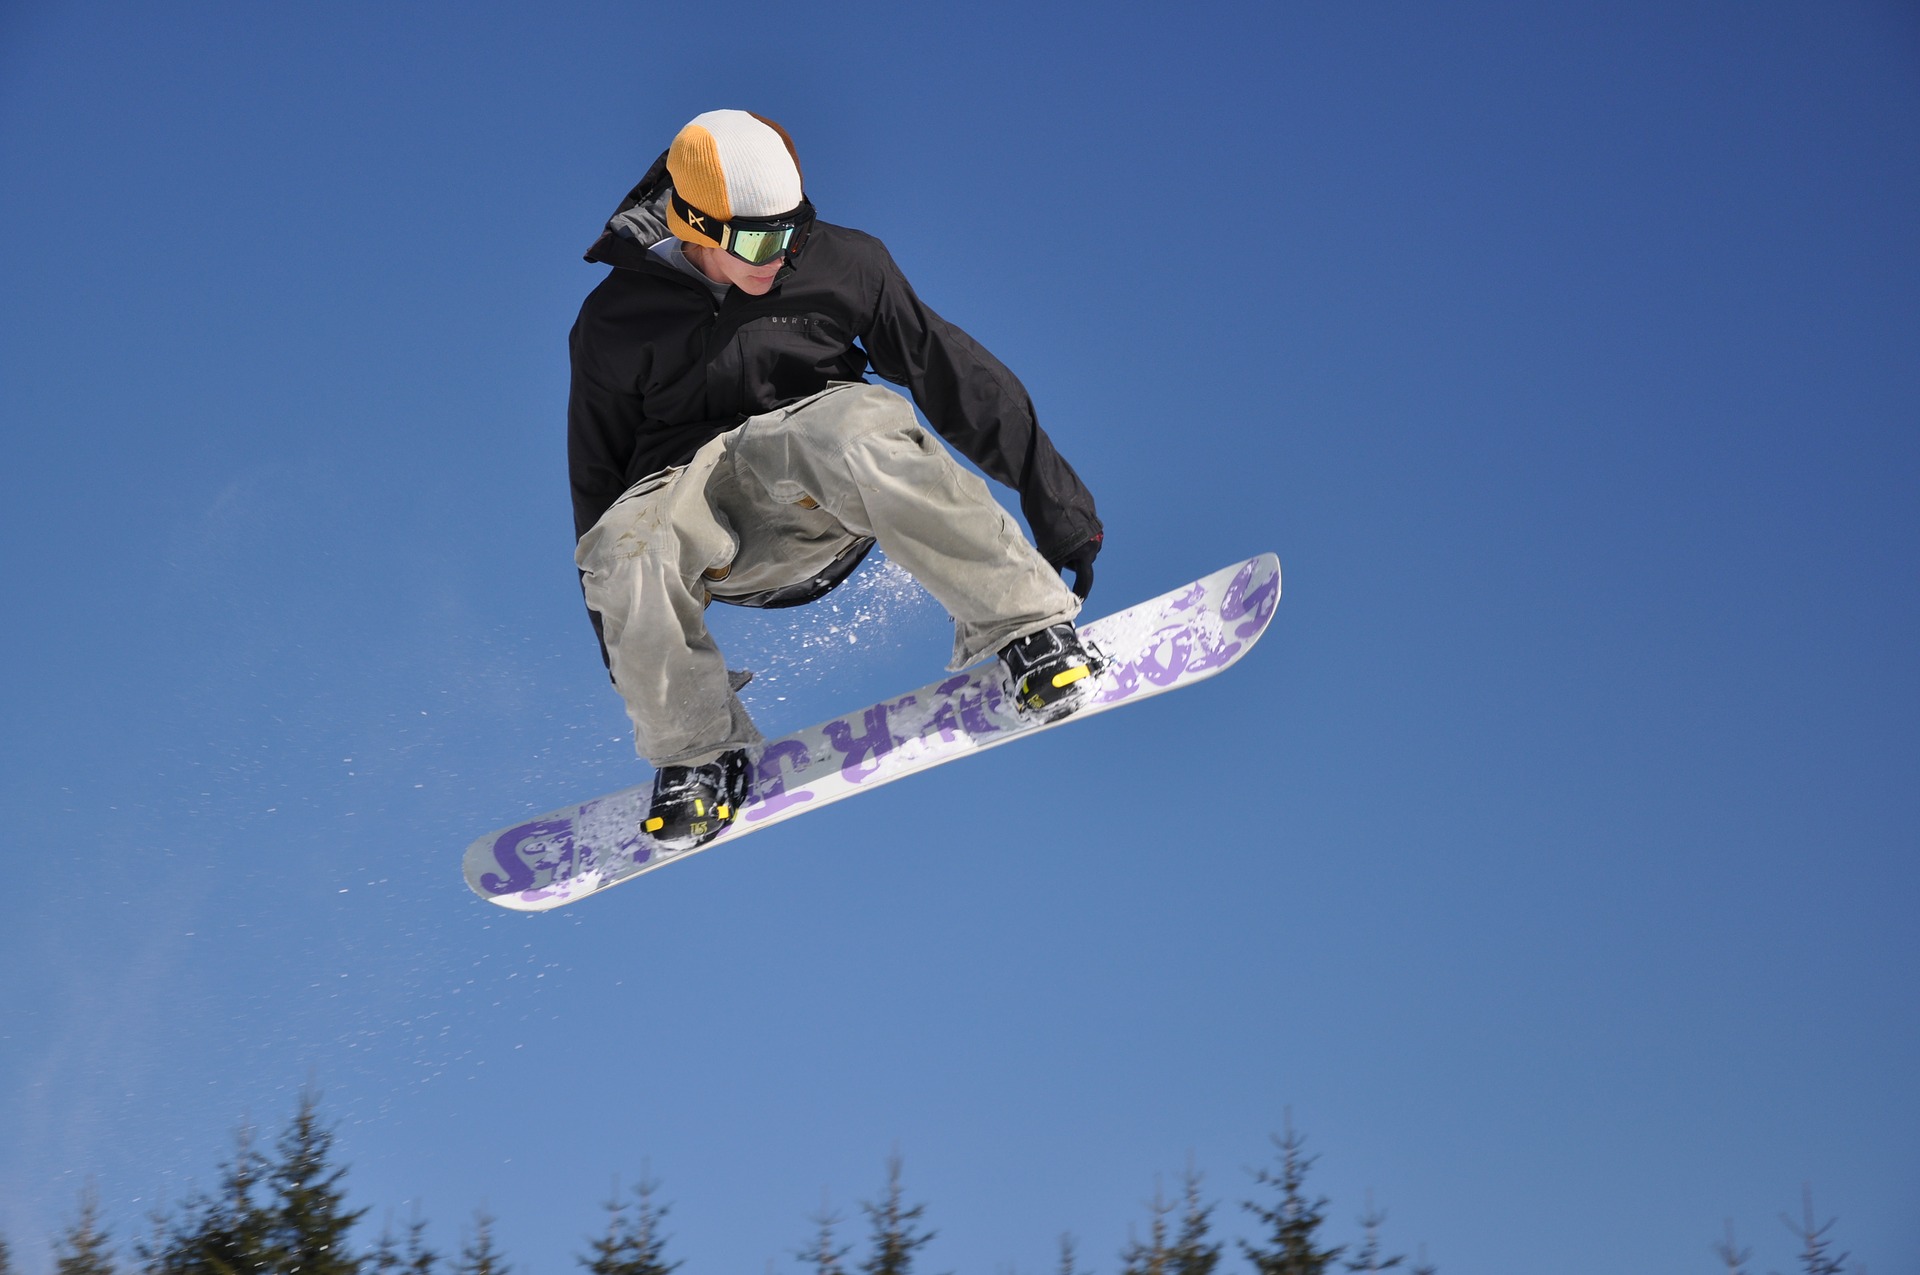 snowboarding-3176182_1920.jpg